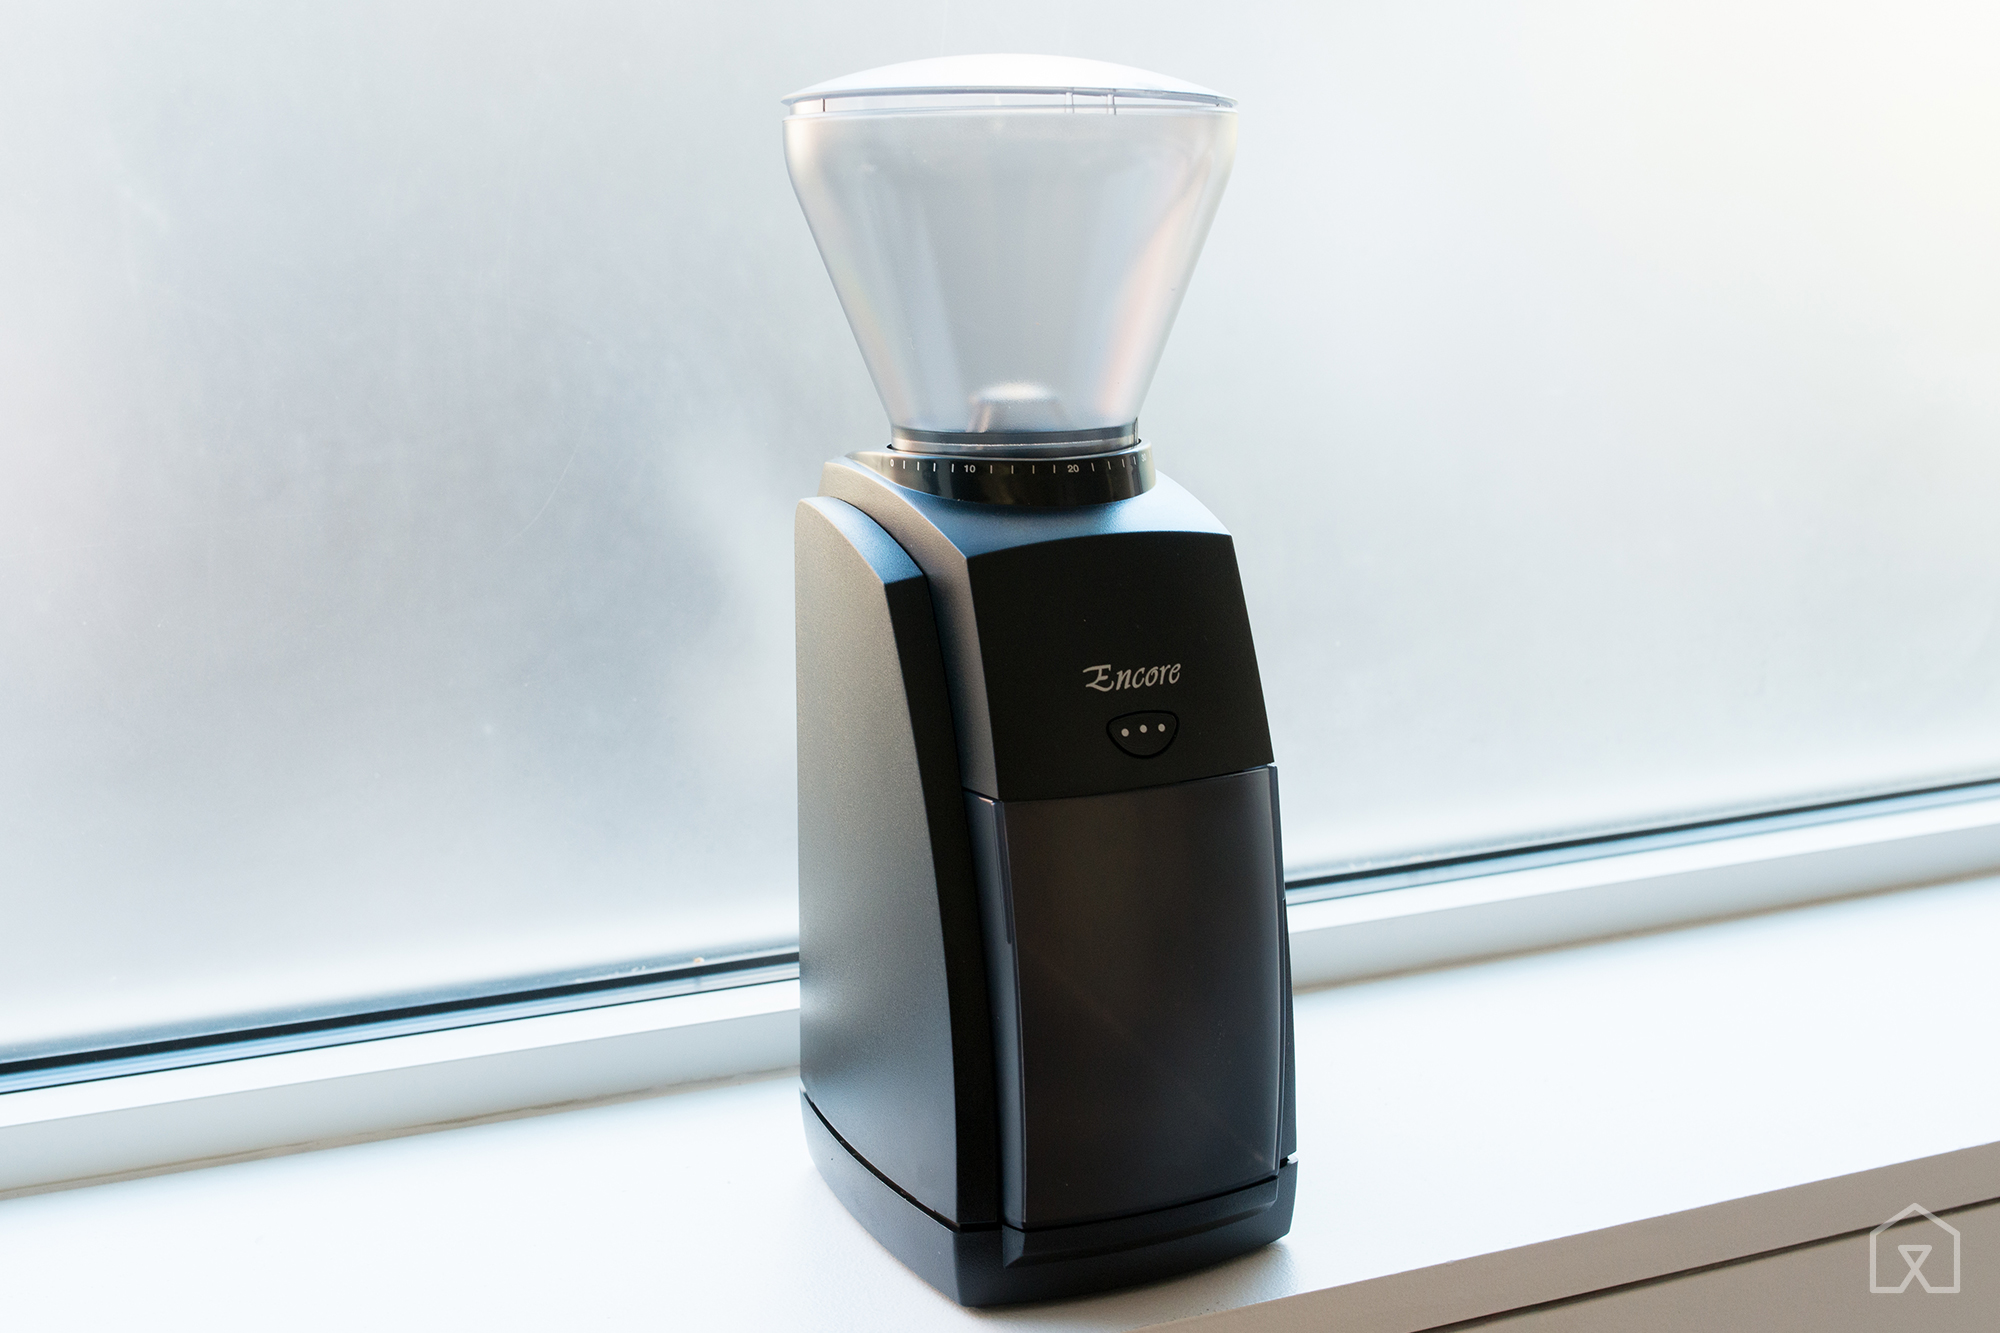 The best coffee grinder